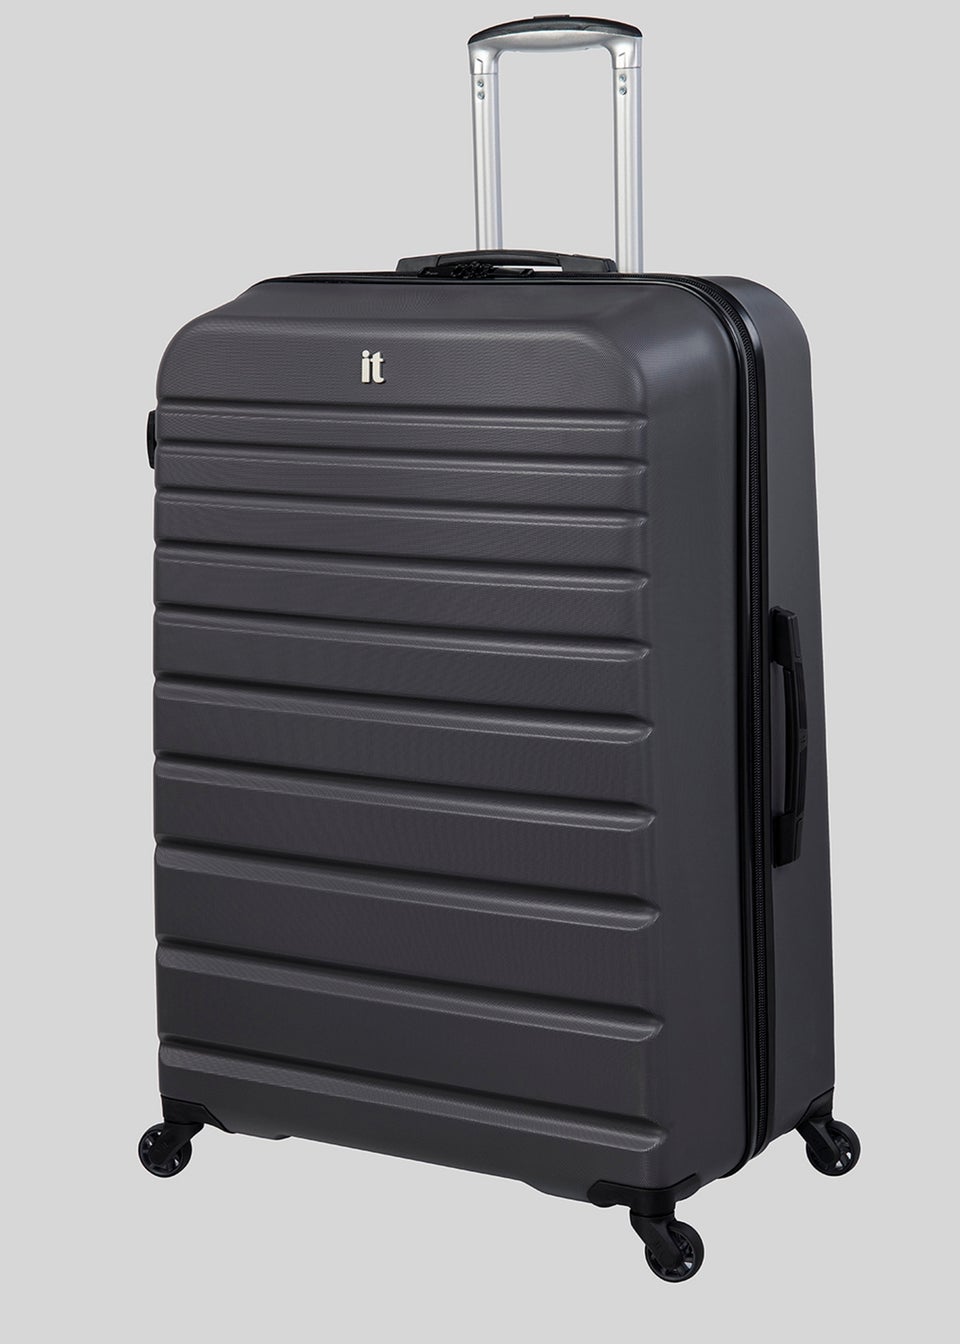 IT Luggage Black Navigator Suitcase